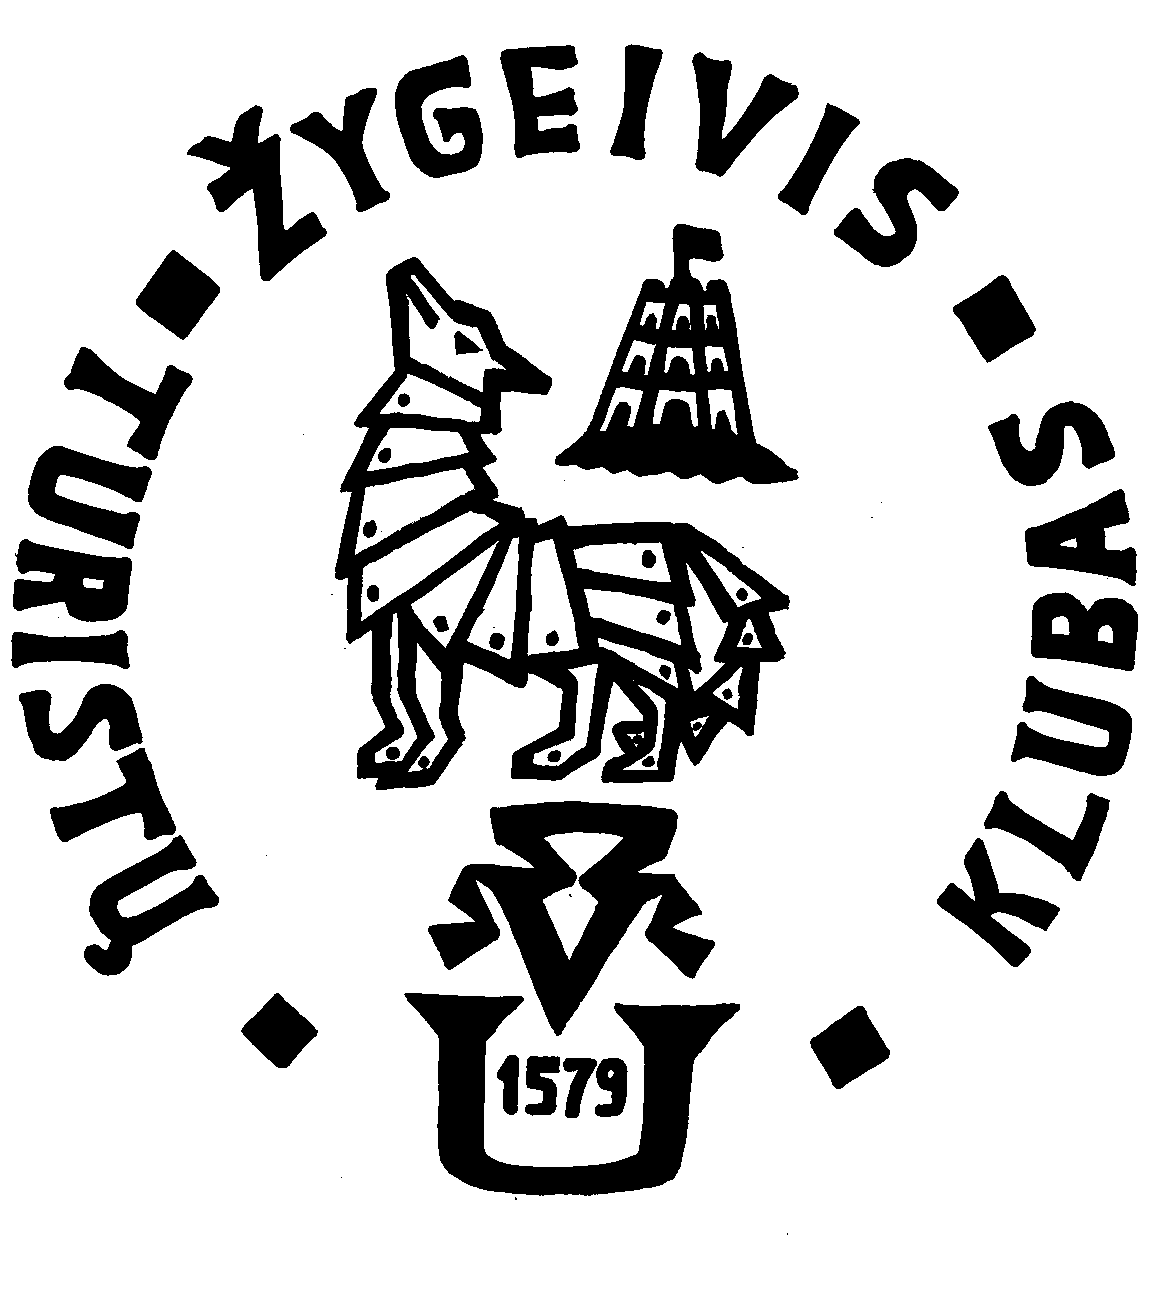 Vilniaus Universiteto Zygeiviu klubo emblema 1989 m. (sukure K. Ceponis).png